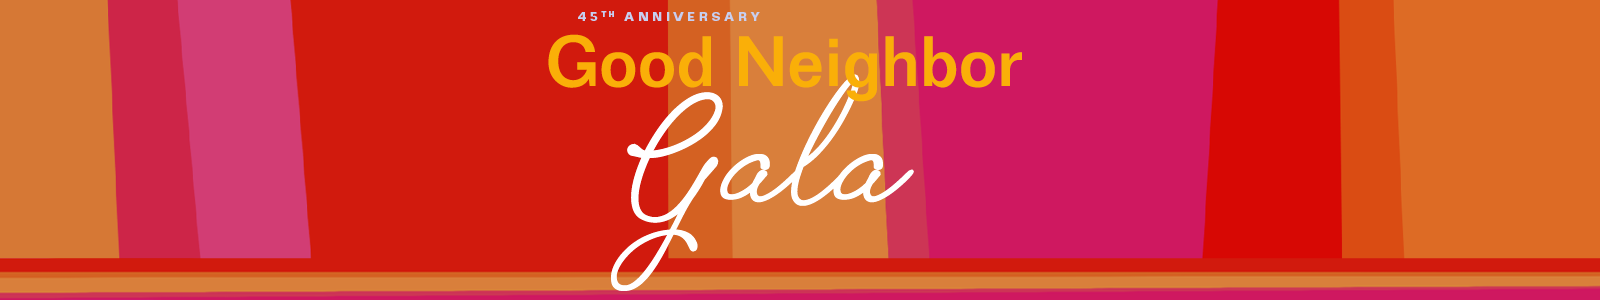 Good Neighbor Gala 2019